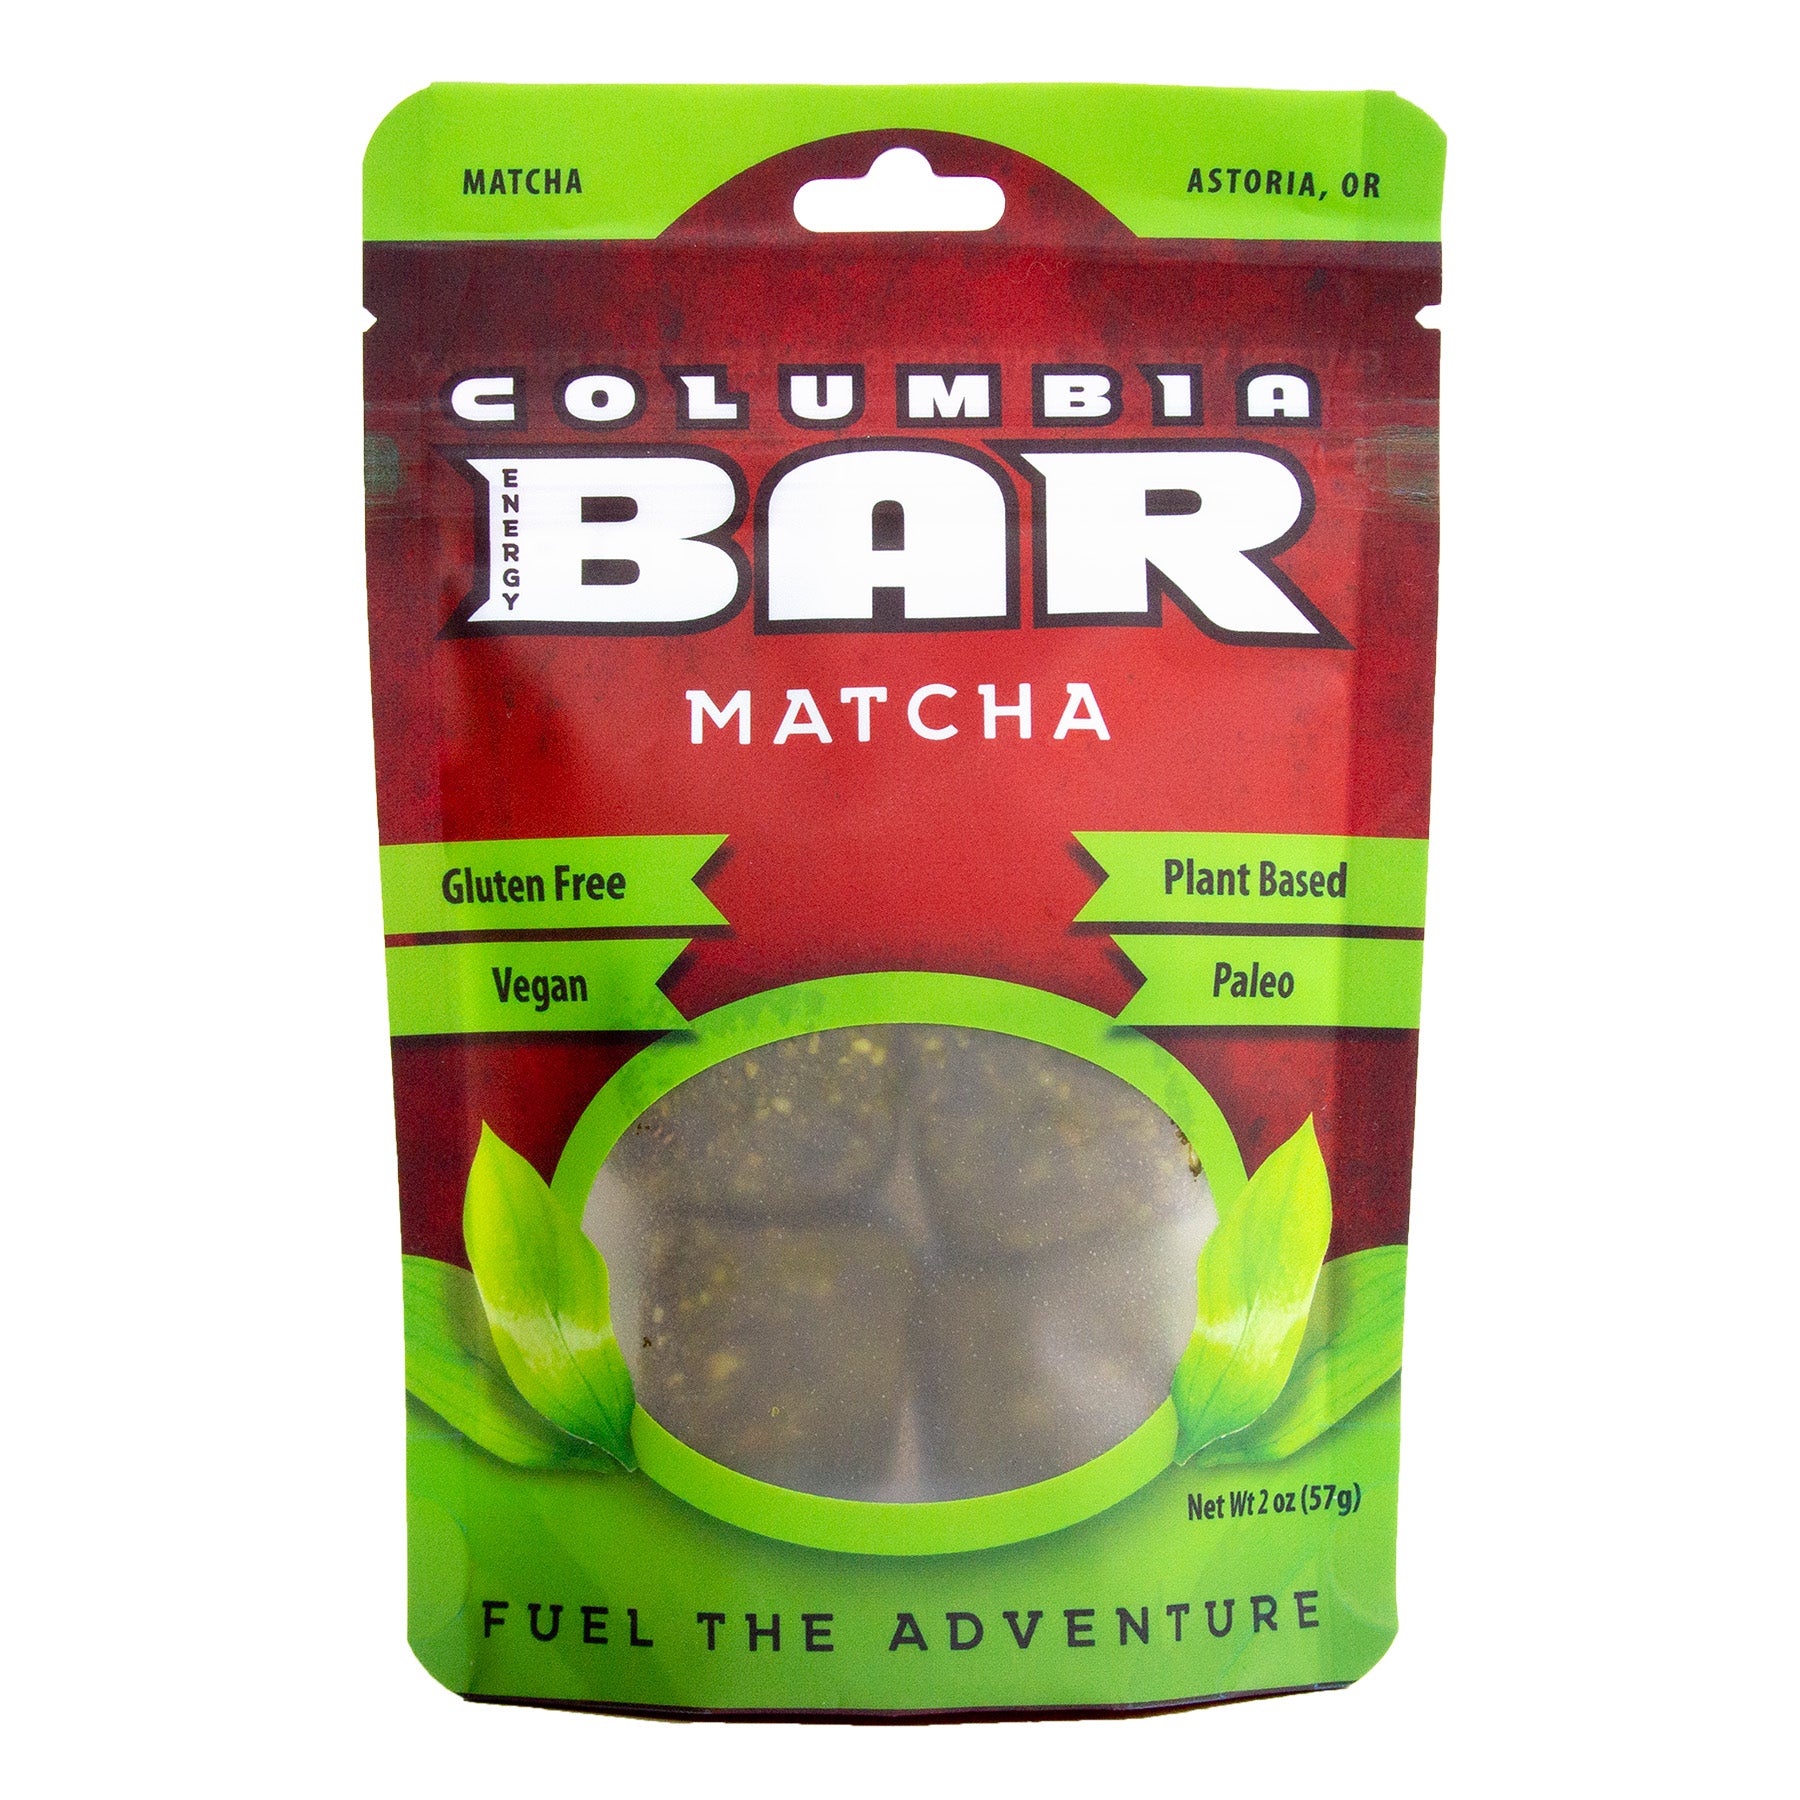 Columbia Bar Matcha Snack Bar - 2 oz. pack